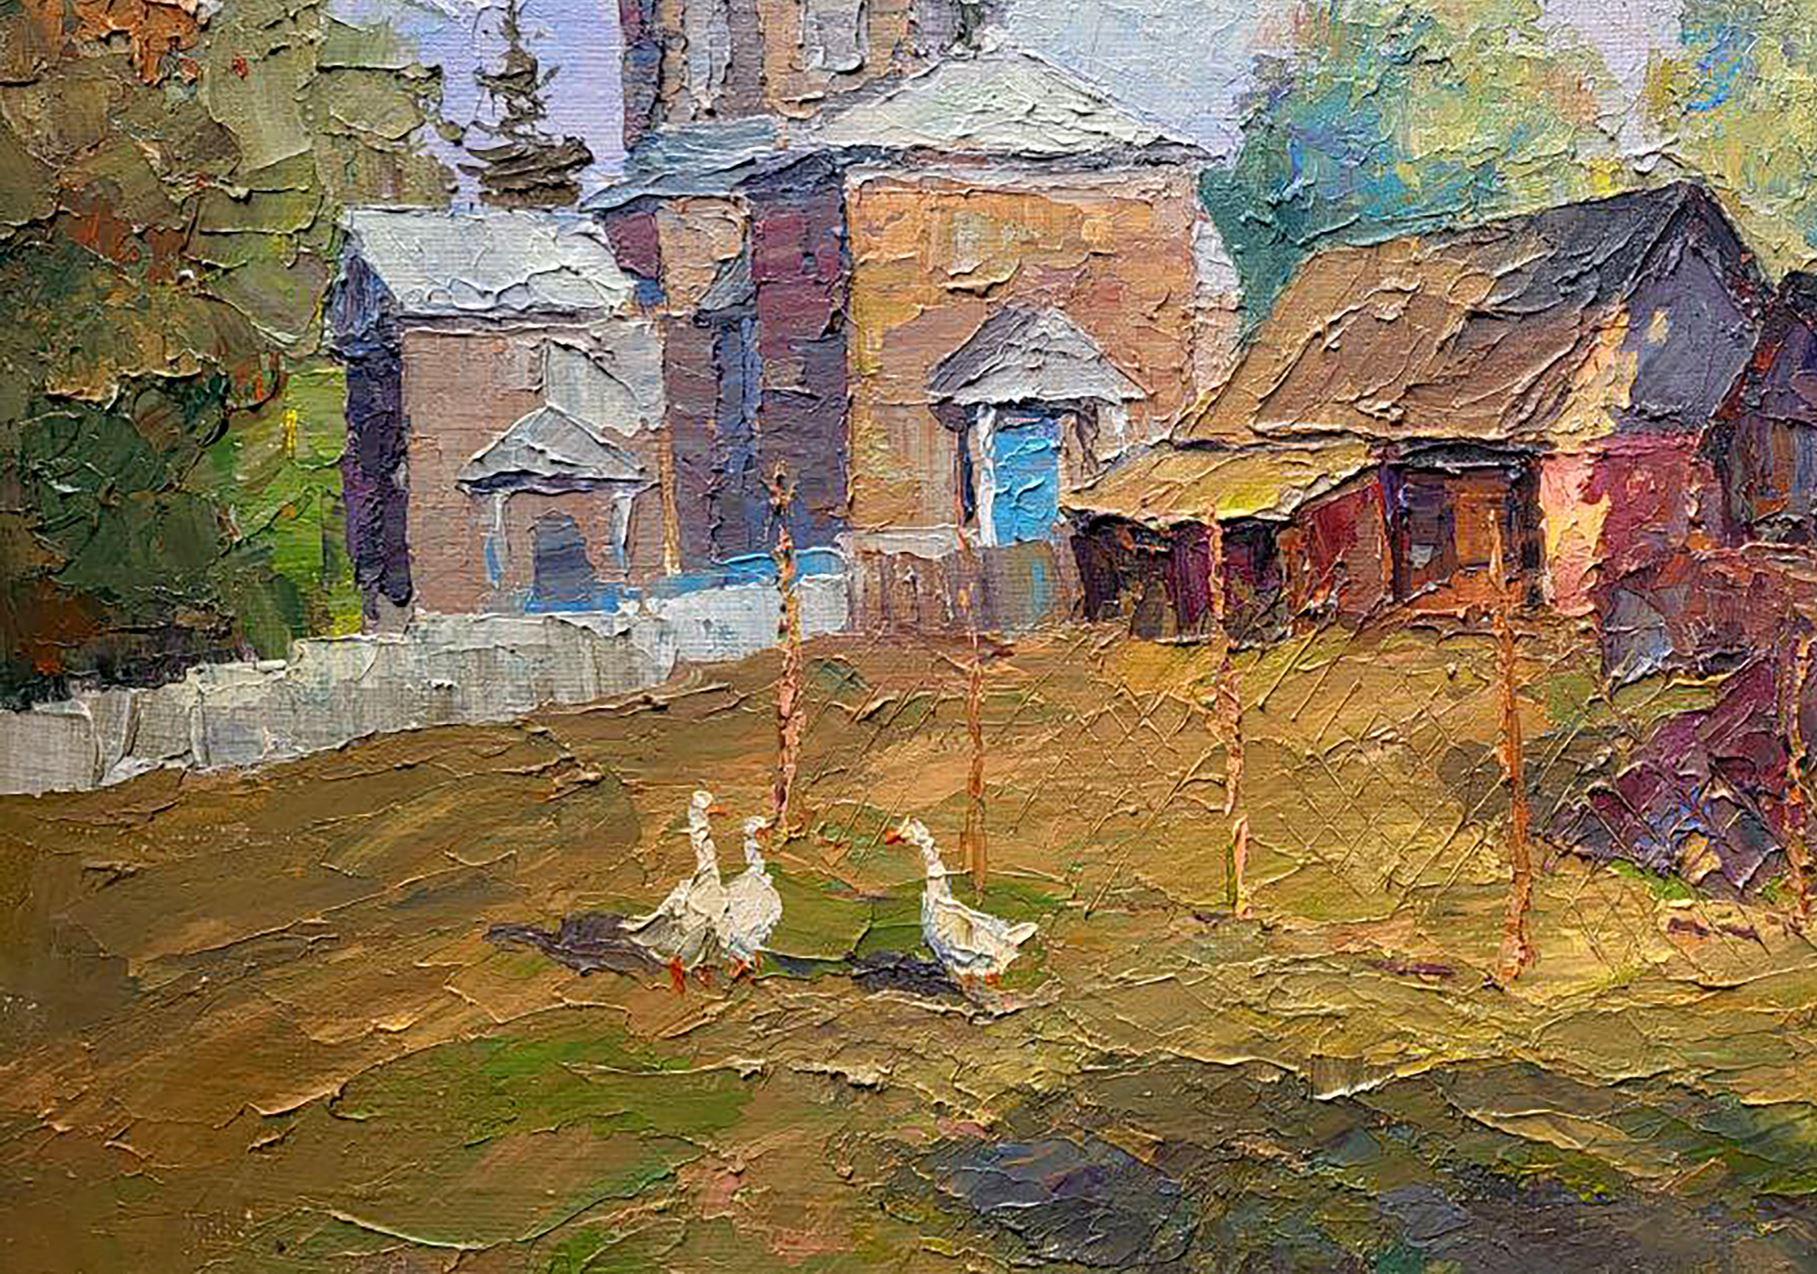 Artist: Boris Serdyuk 
Work: Original oil painting, handmade artwork, one of a kind 
Medium: Oil on Canvas
Style: Impressionism
Year: 2020
Title: Church Yard
Size: 19.5